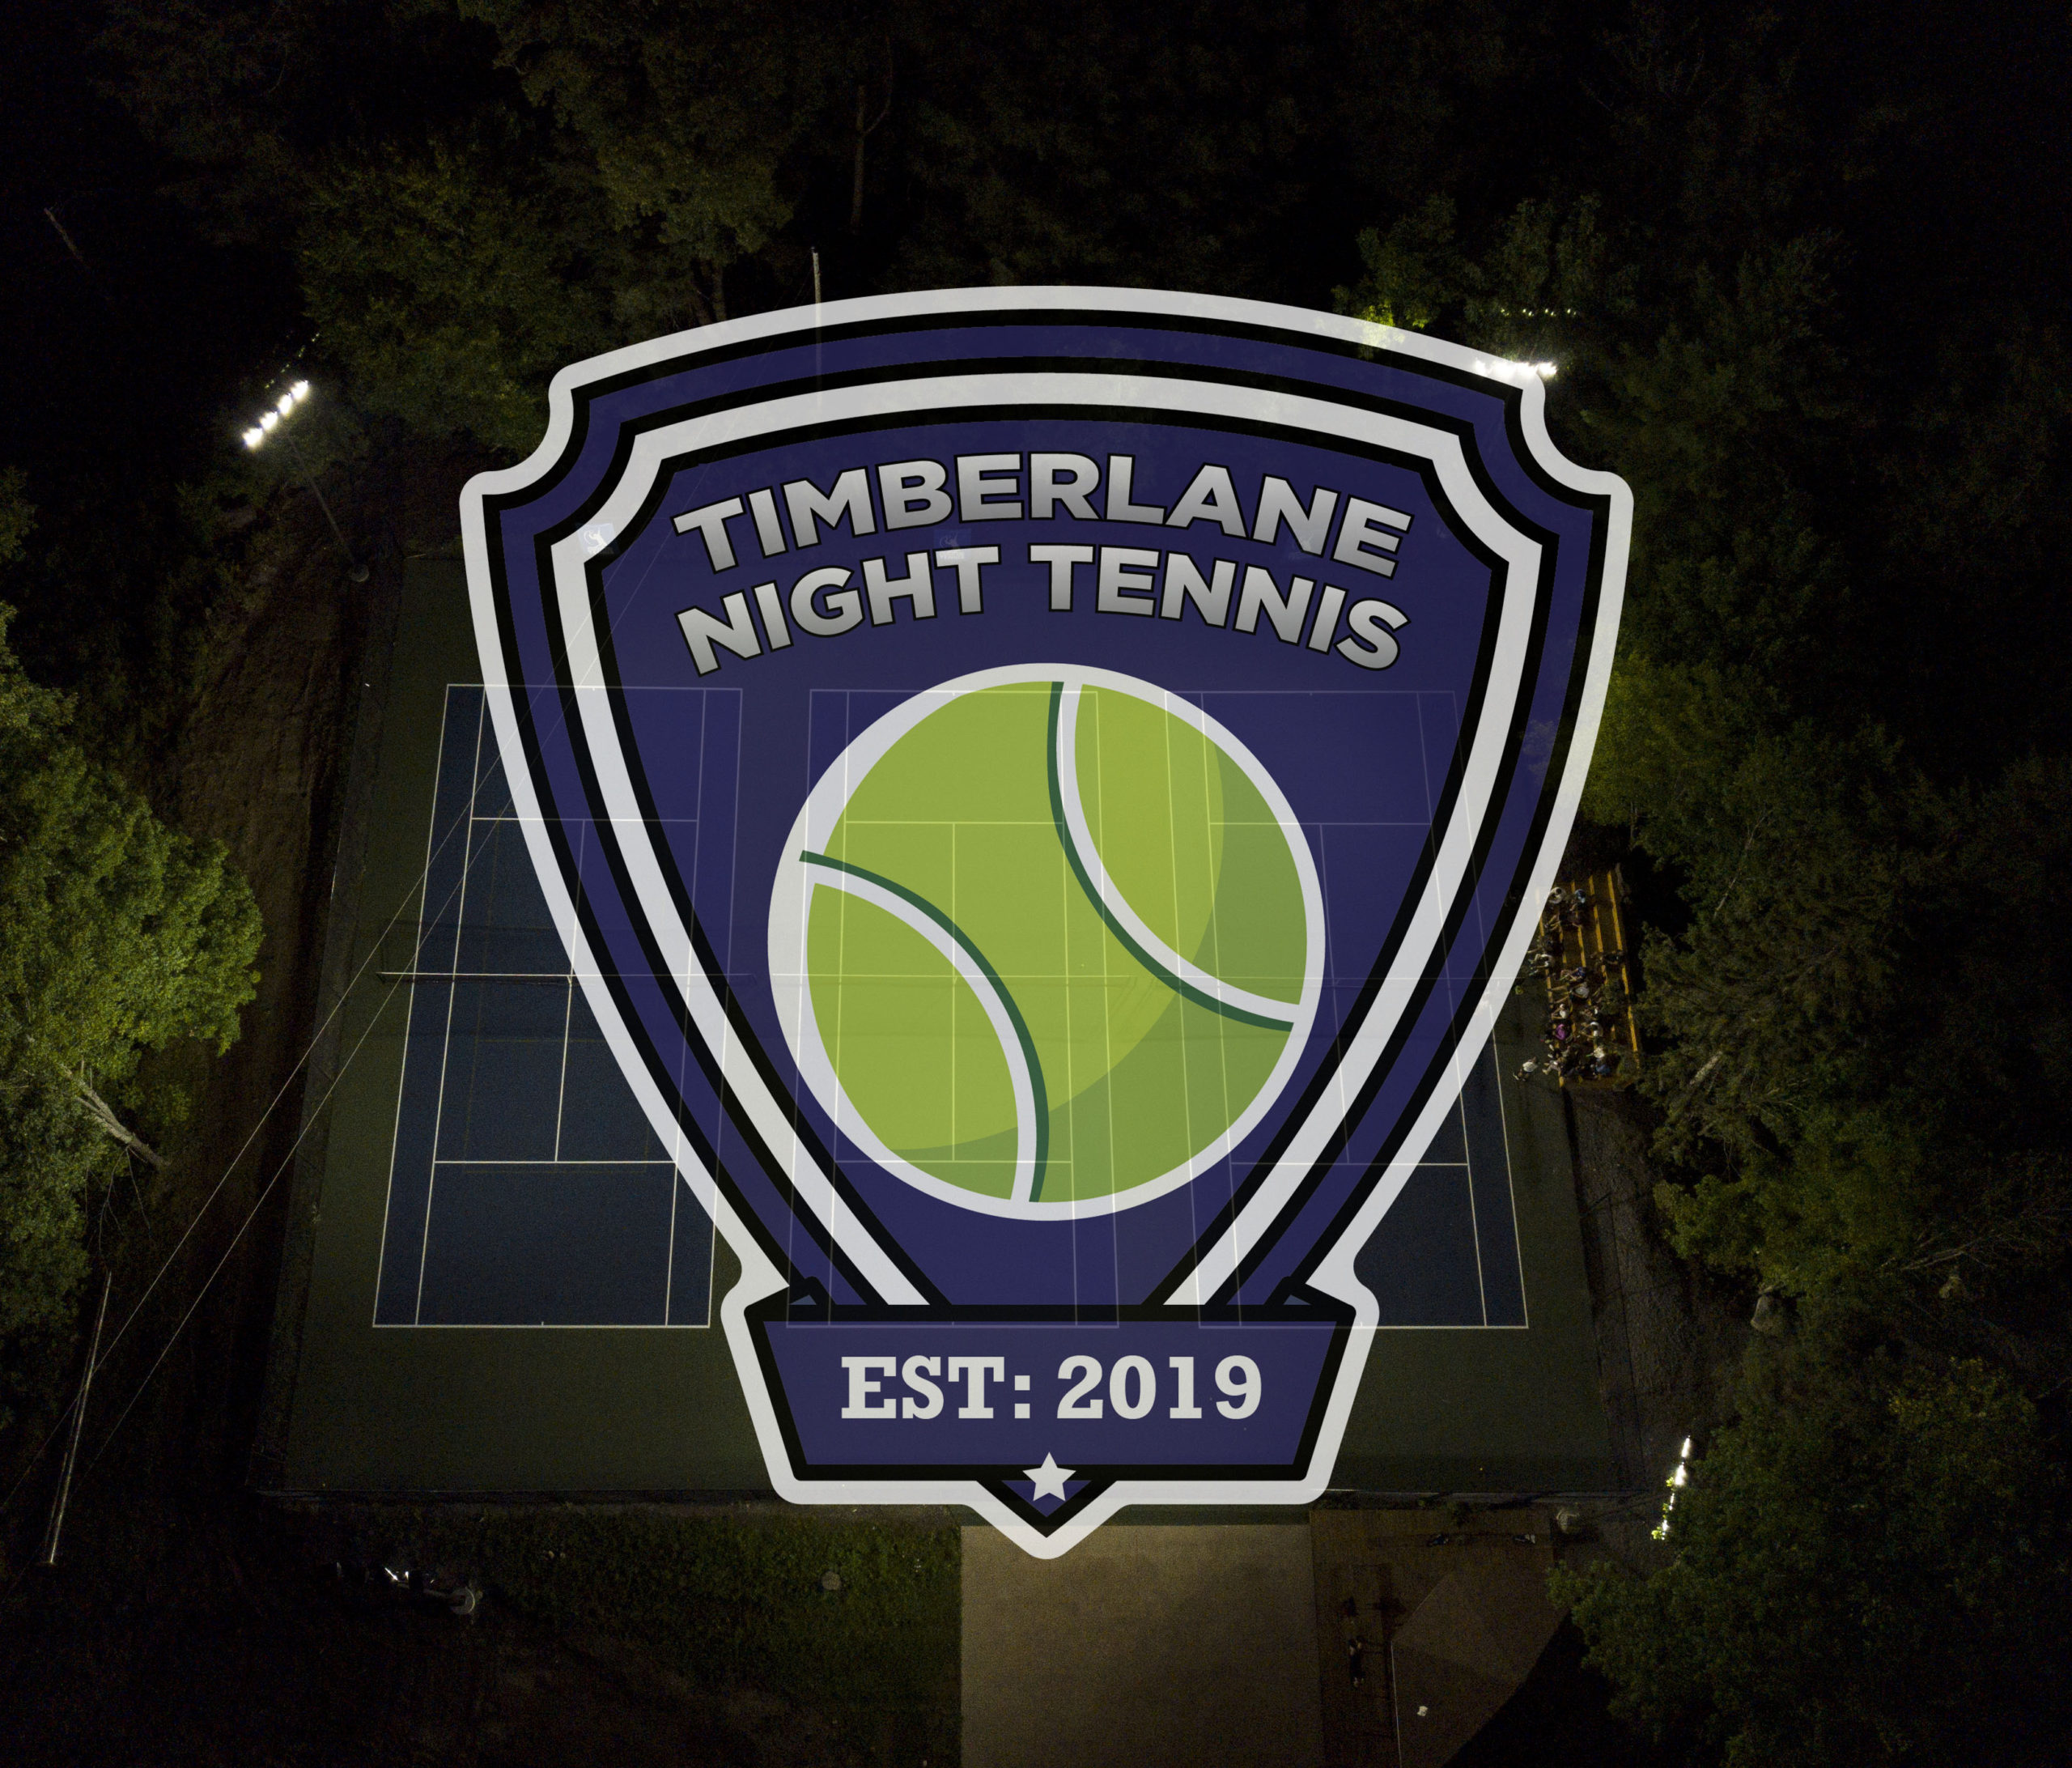 Night Tennis